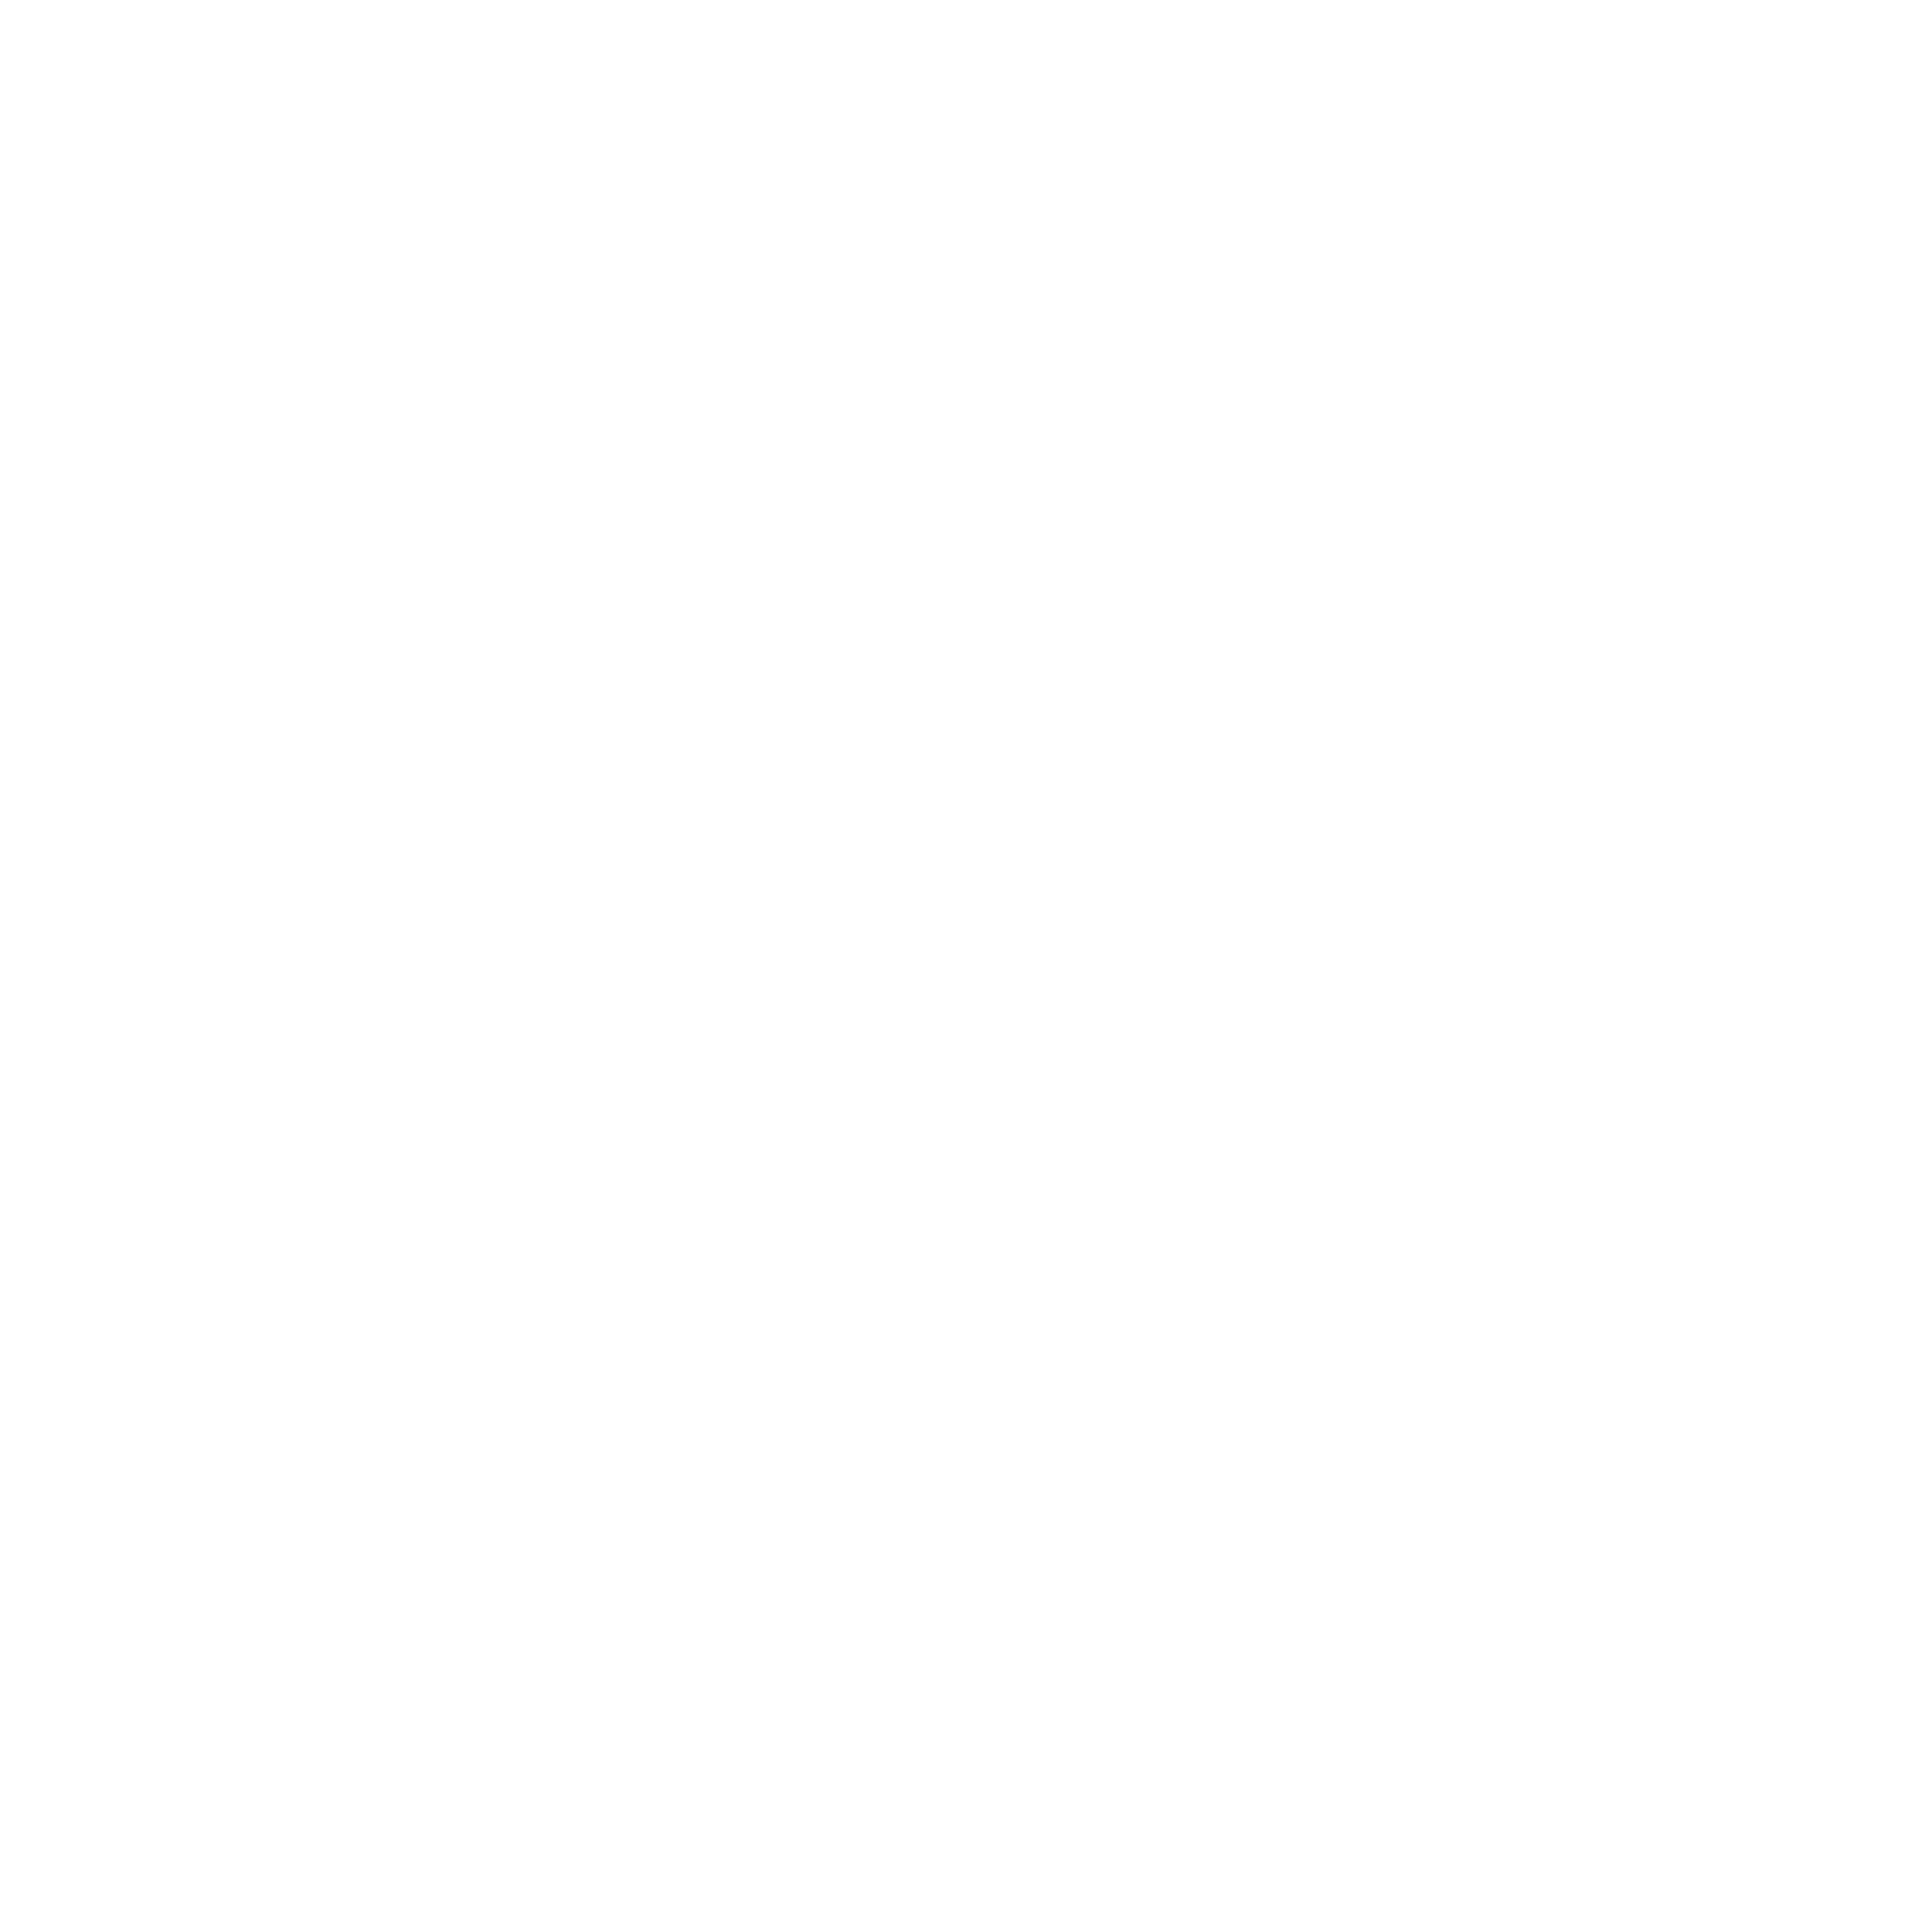 Industria, Innovació i Infraestructura